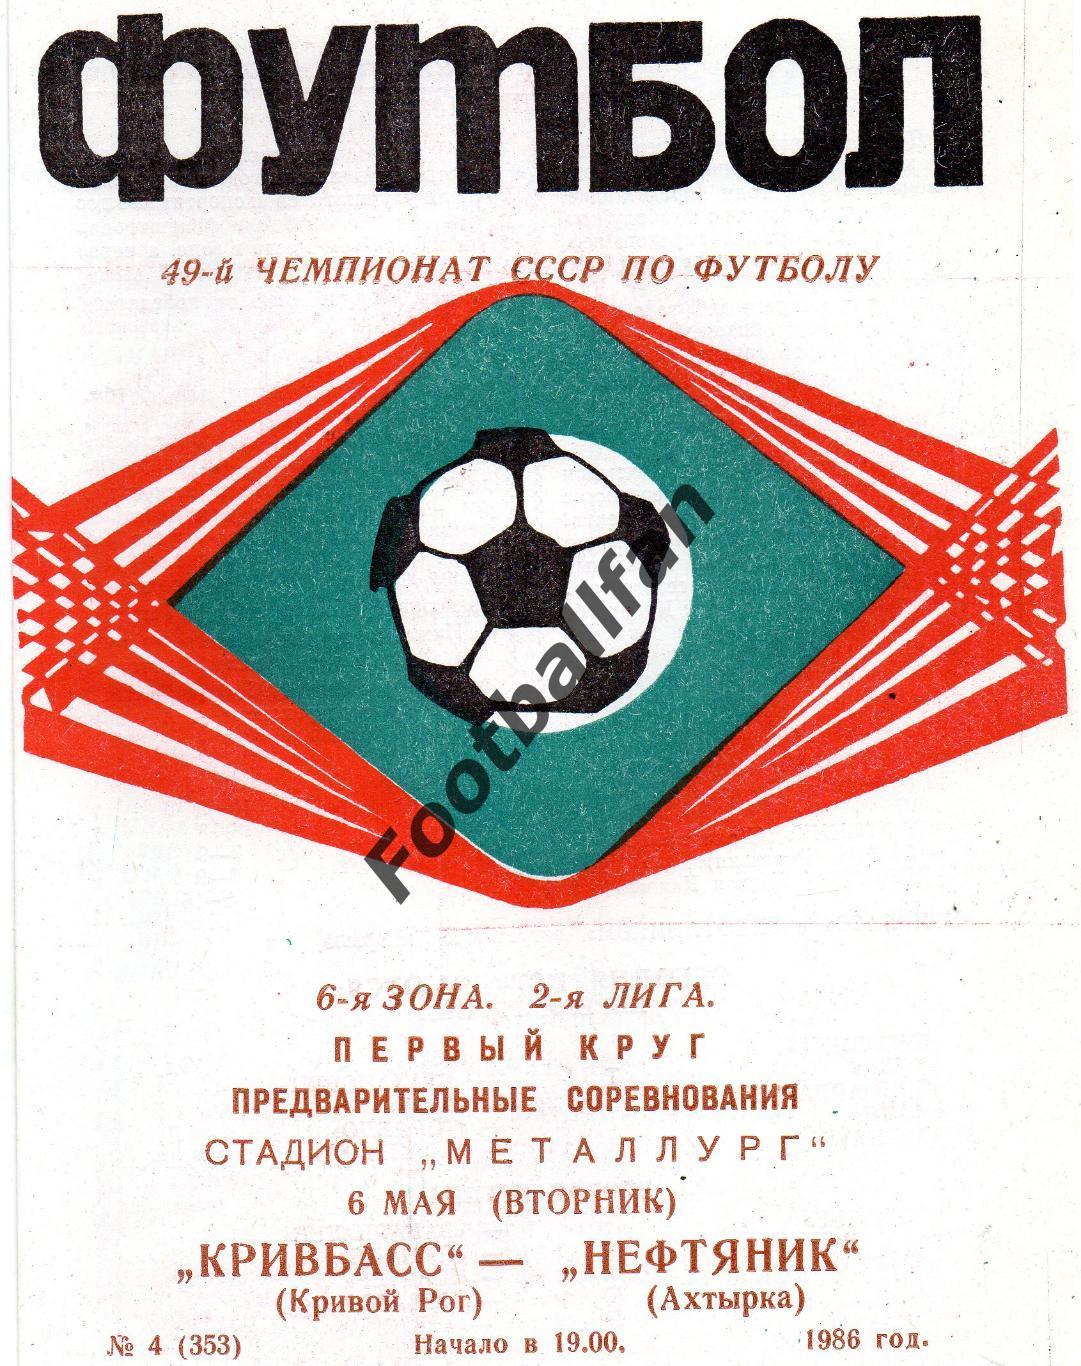 Кривбасс Кривой Рог - Нефтяник Ахтырка 06.05.1986